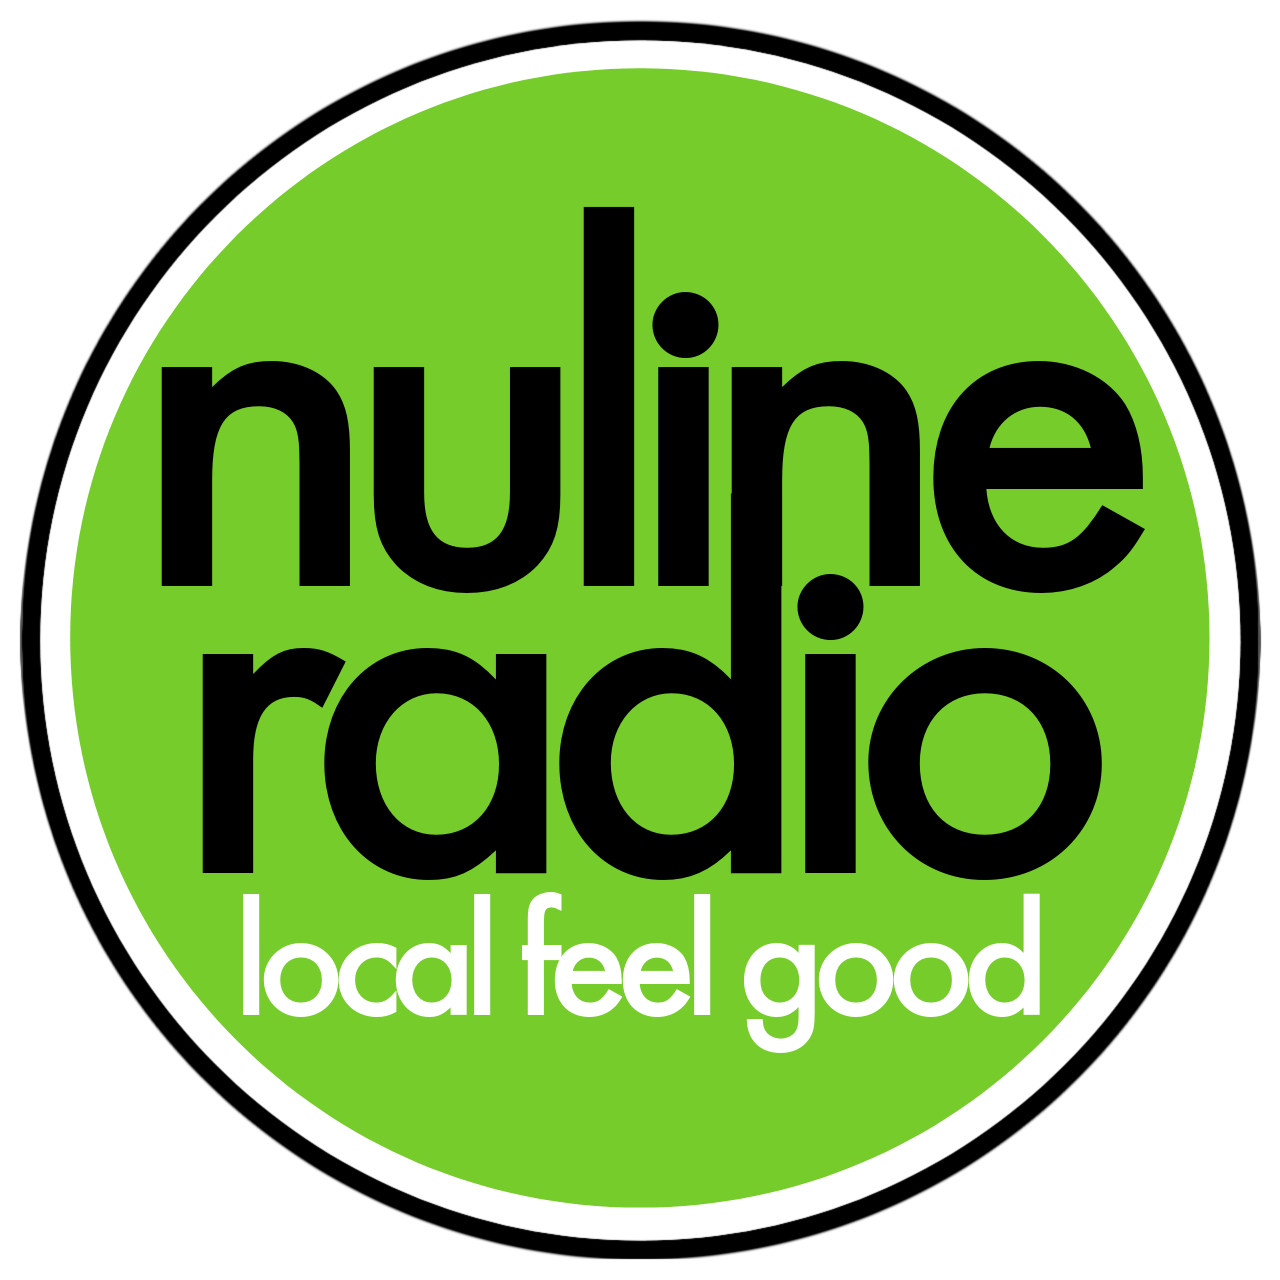 nuline radio brand logo.24.1280.png